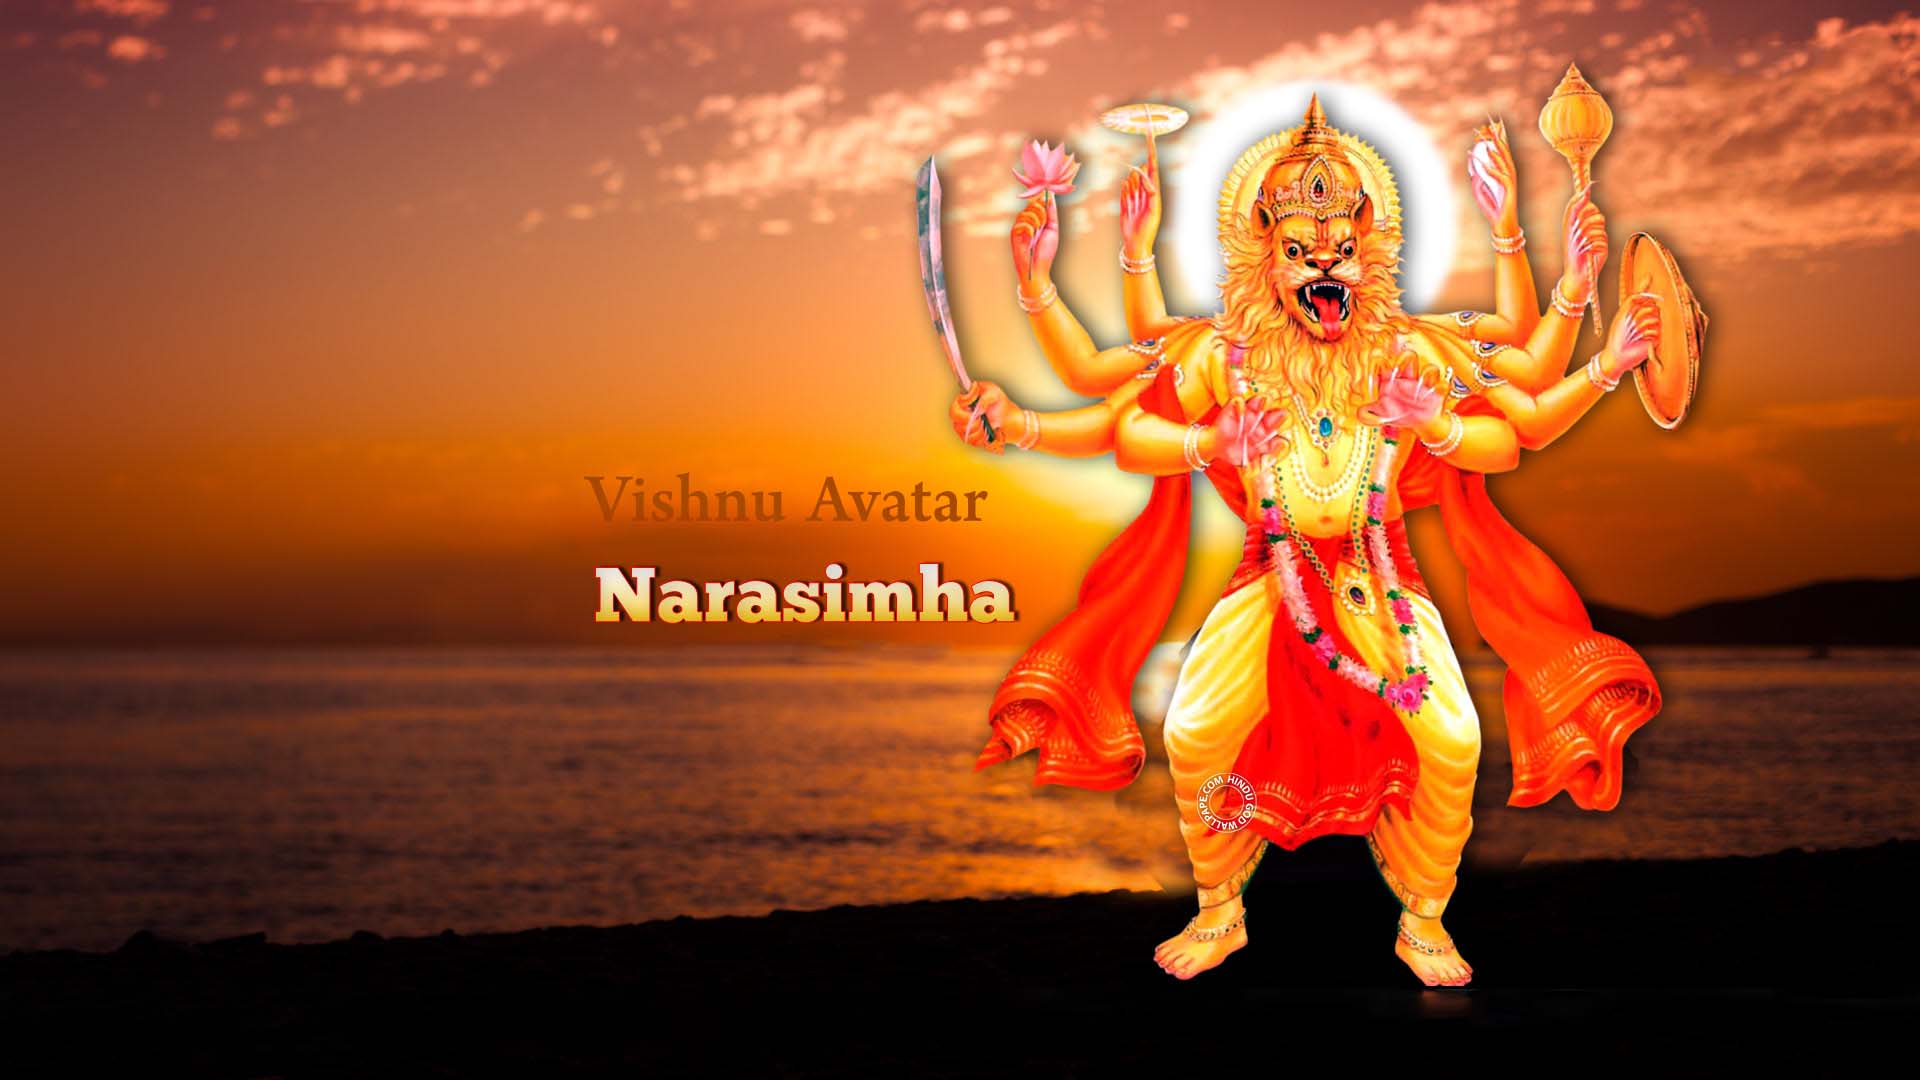 Vishnu avatar photos free download hindu gods and goddesses